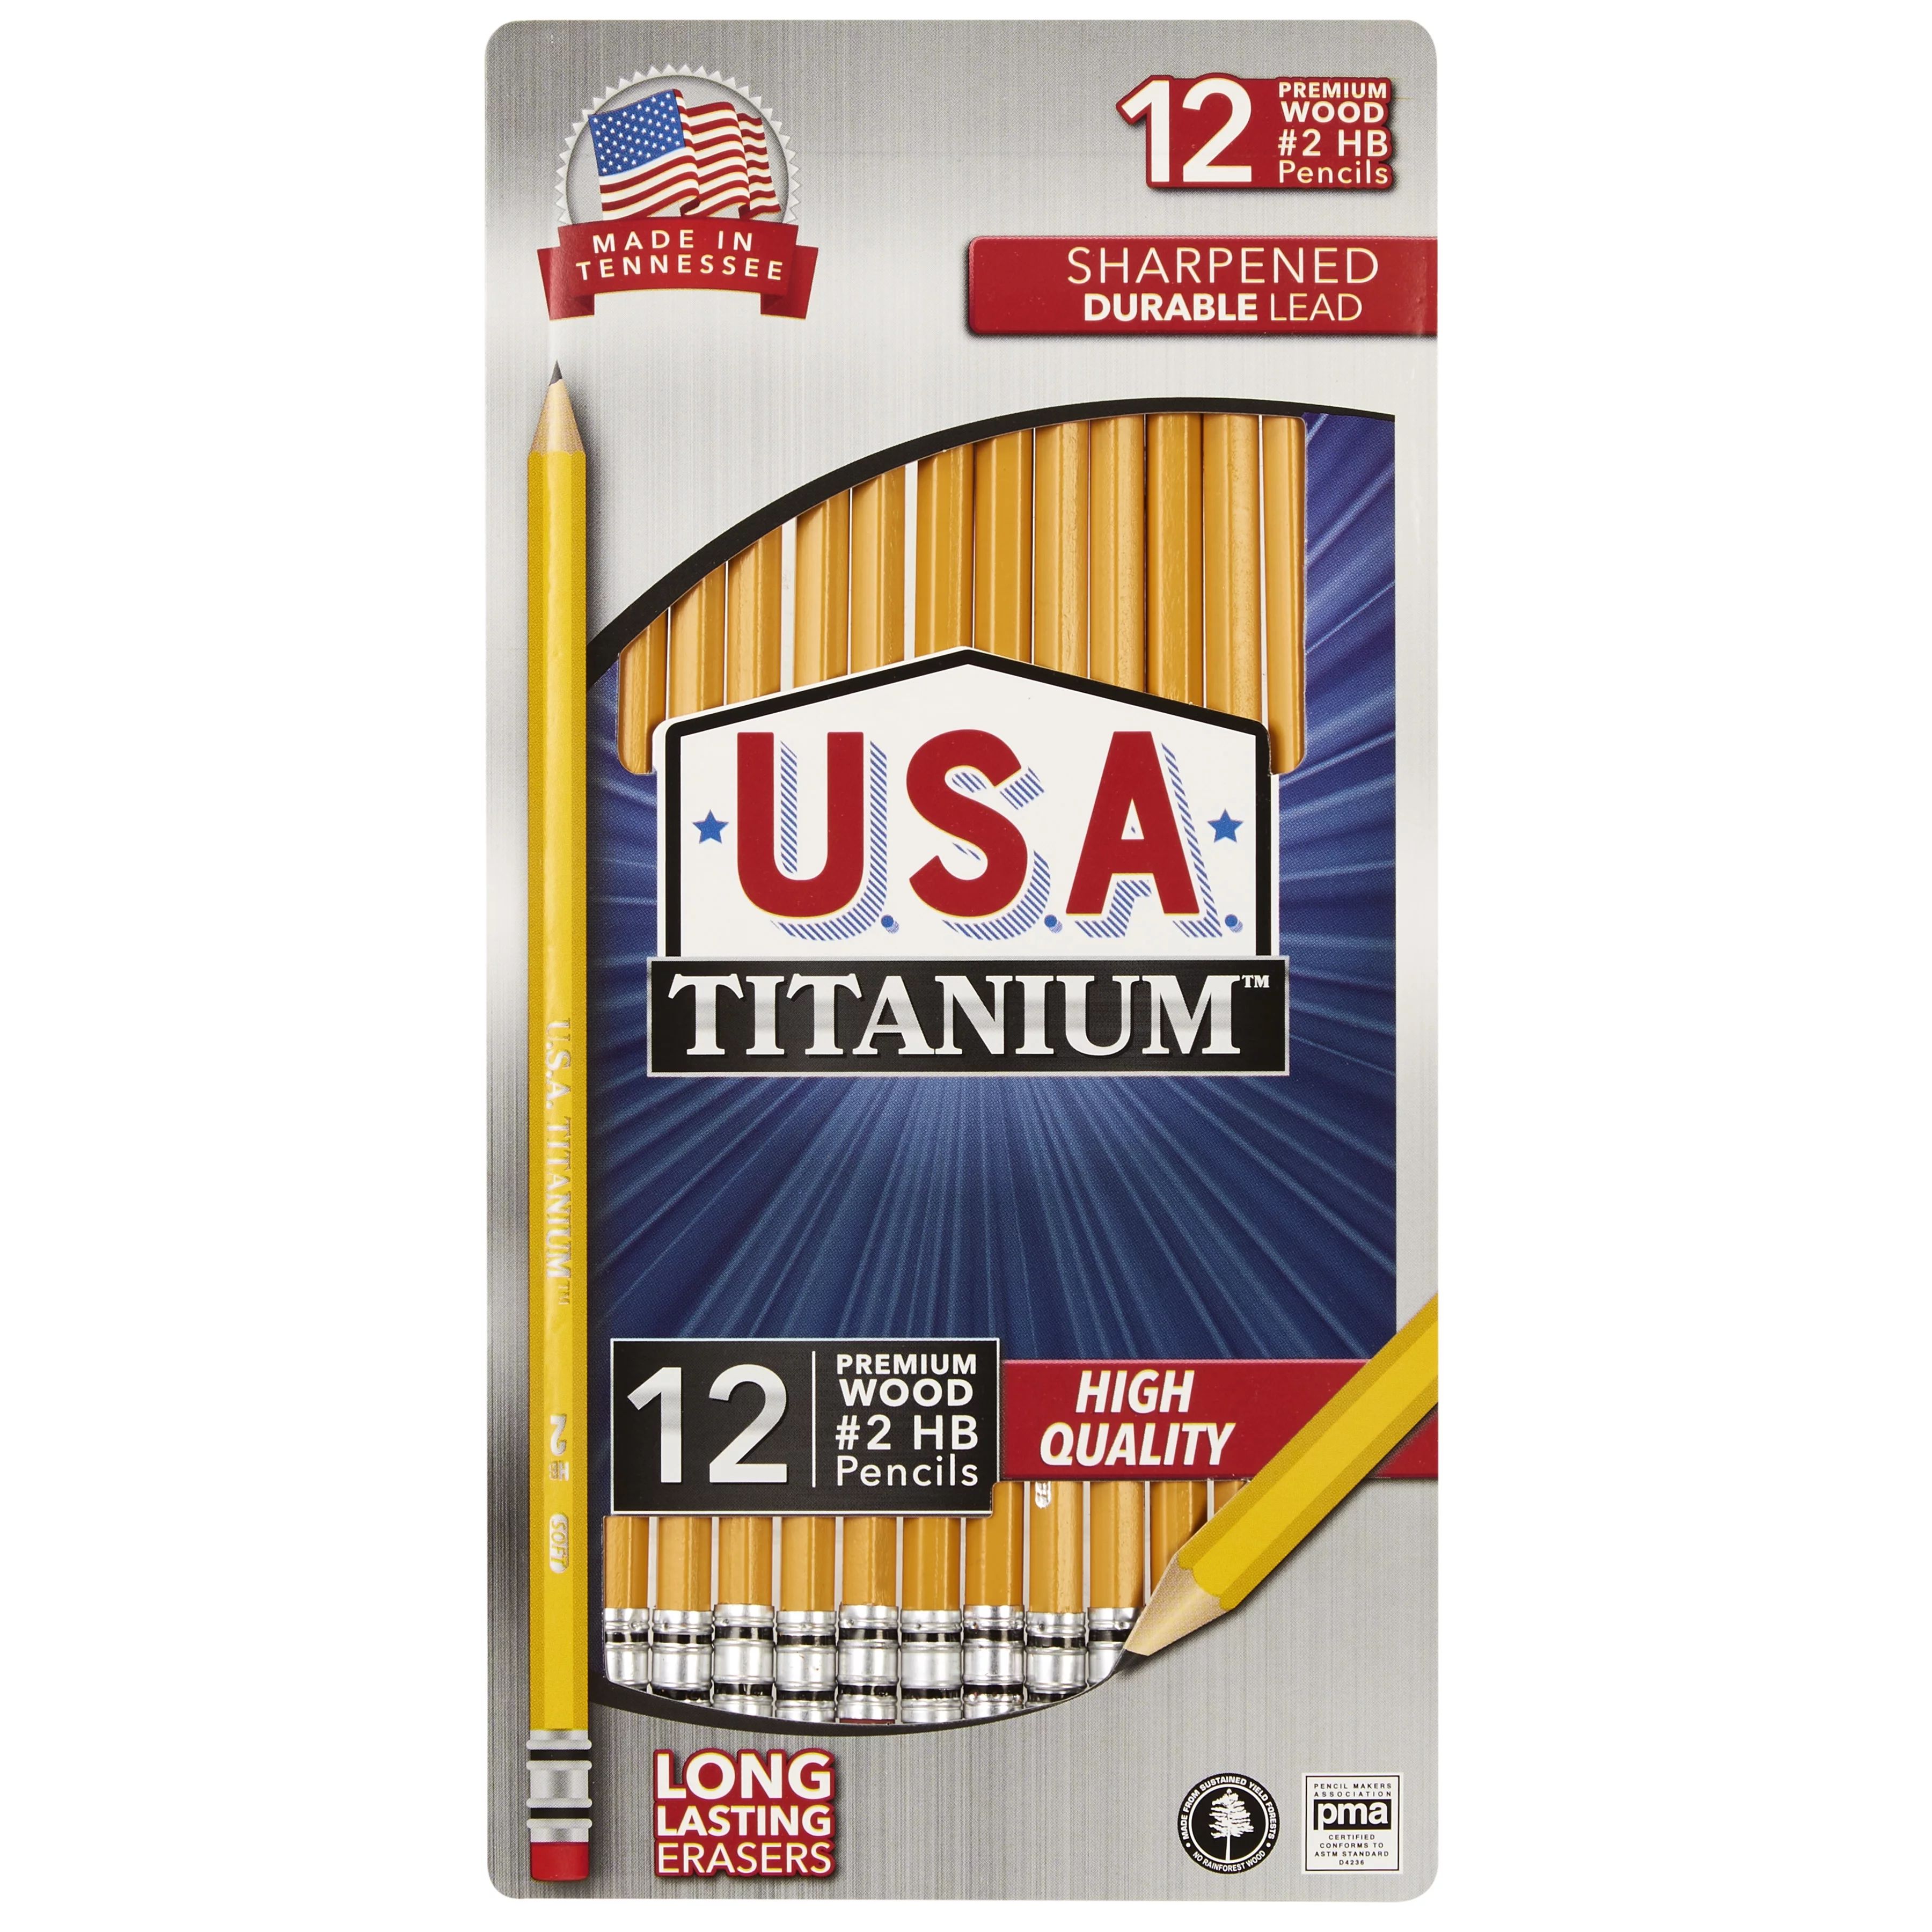 USA Titanium Premium Yellow No.2 Pencils 12 Count Sharpened Woodcase Pencils | Walmart (US)